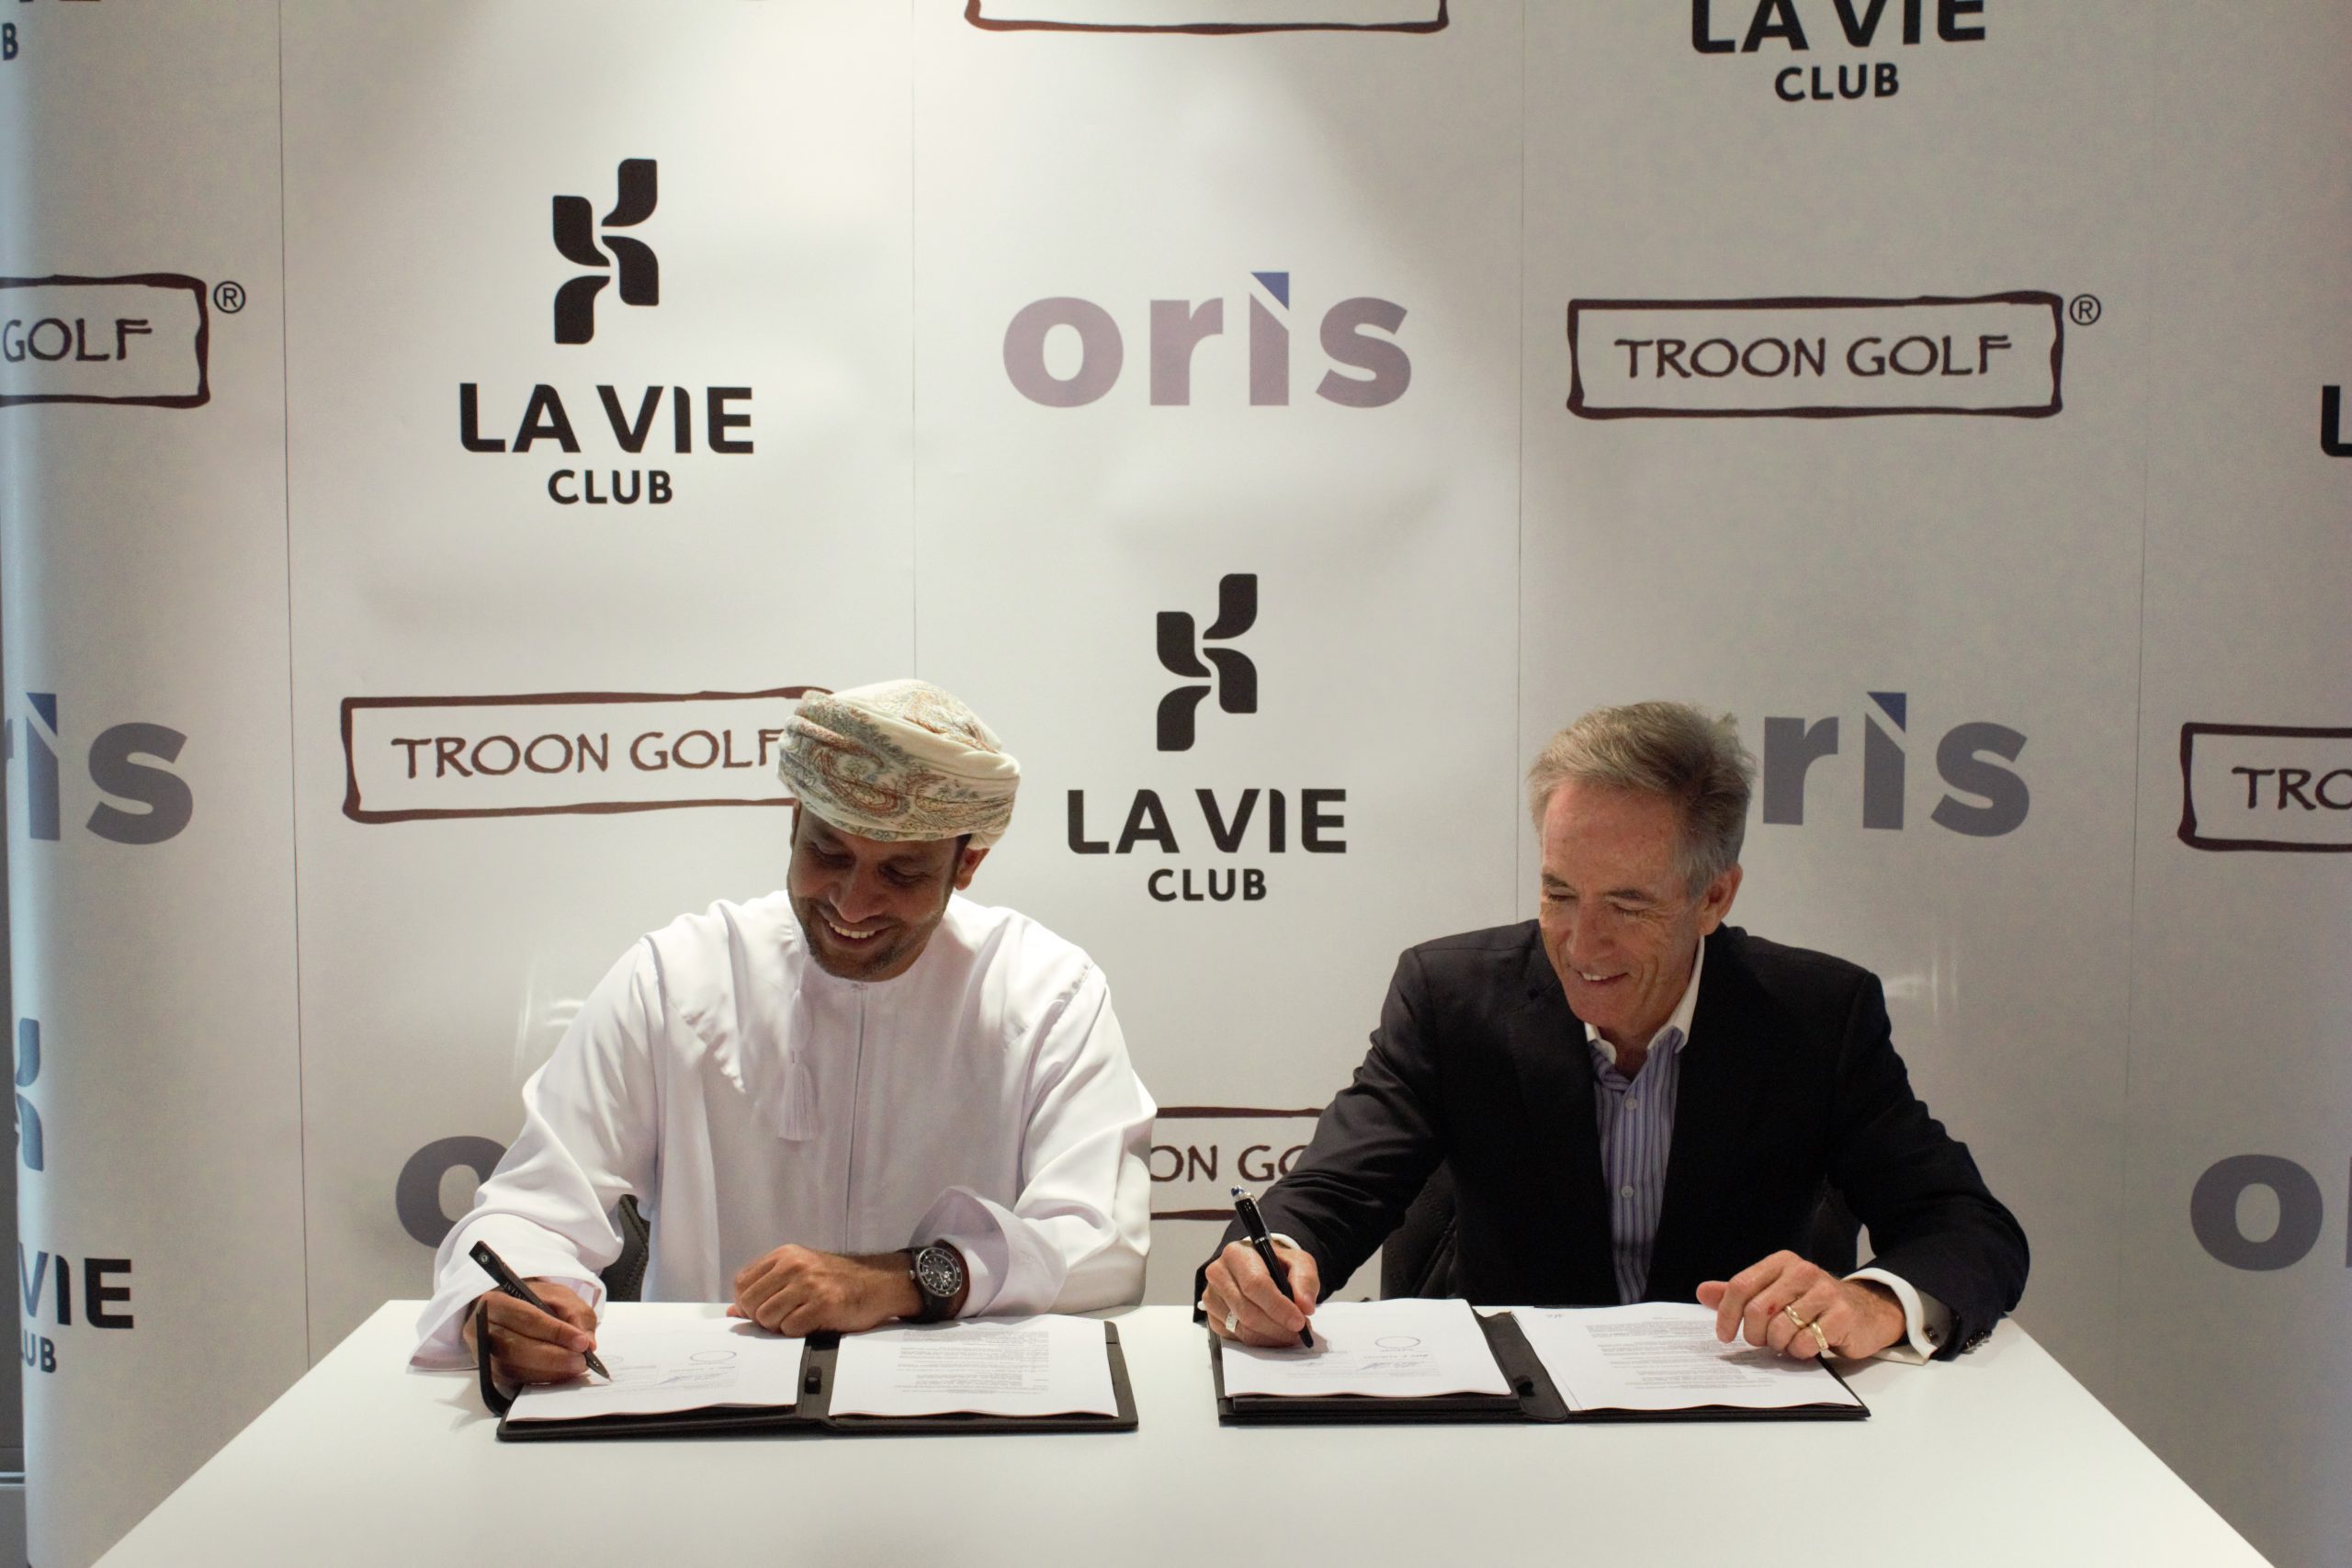 Lavie launches new brand 'Lavie Sport